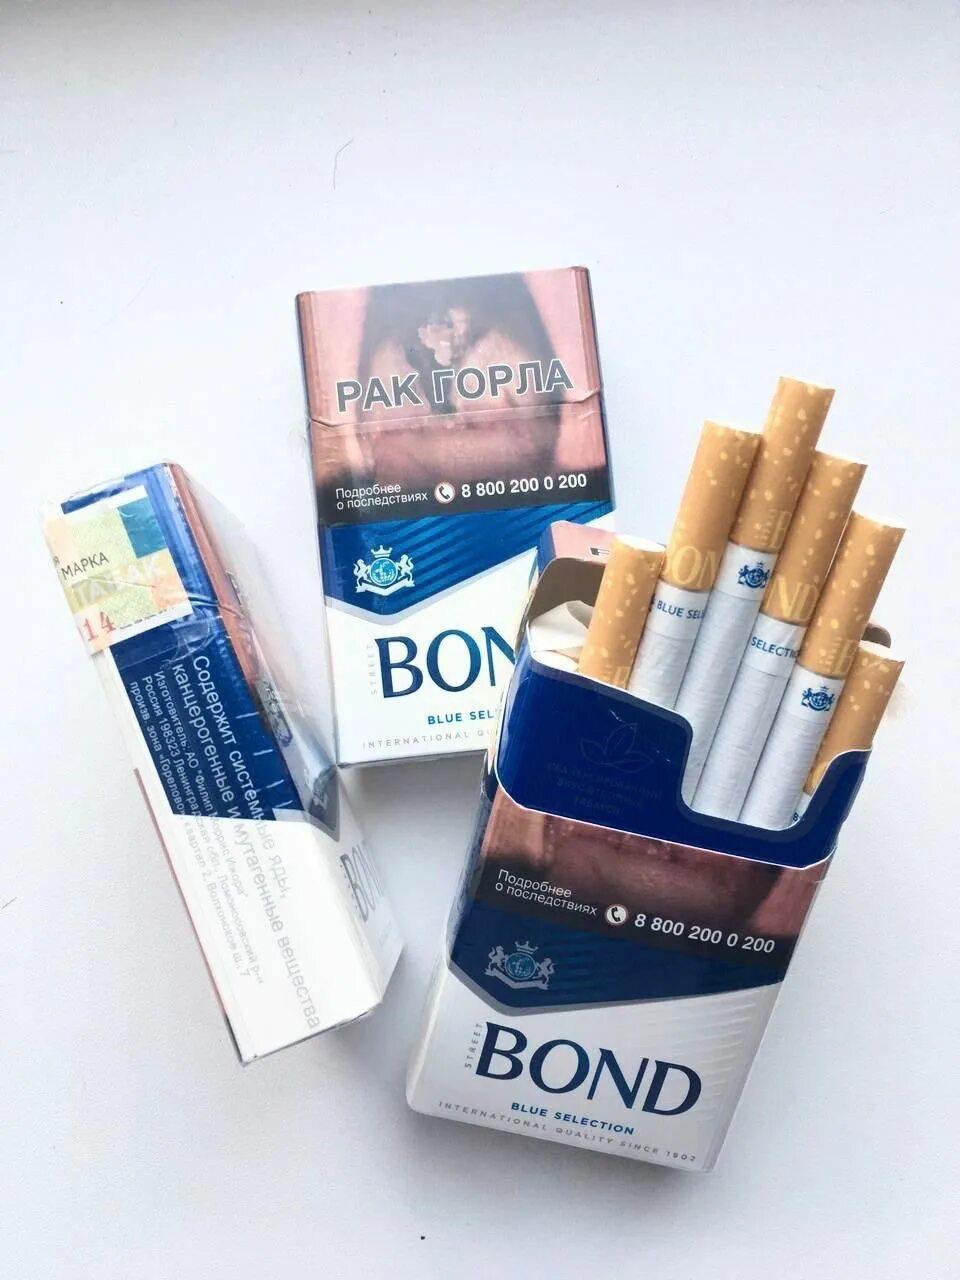 Bond prices. Сигареты Bond Compact Blue. Сигареты Бонд компакт синий. Сигареты мондмонд Блю компакт. Сигареты Бонд компакт Мальборо.